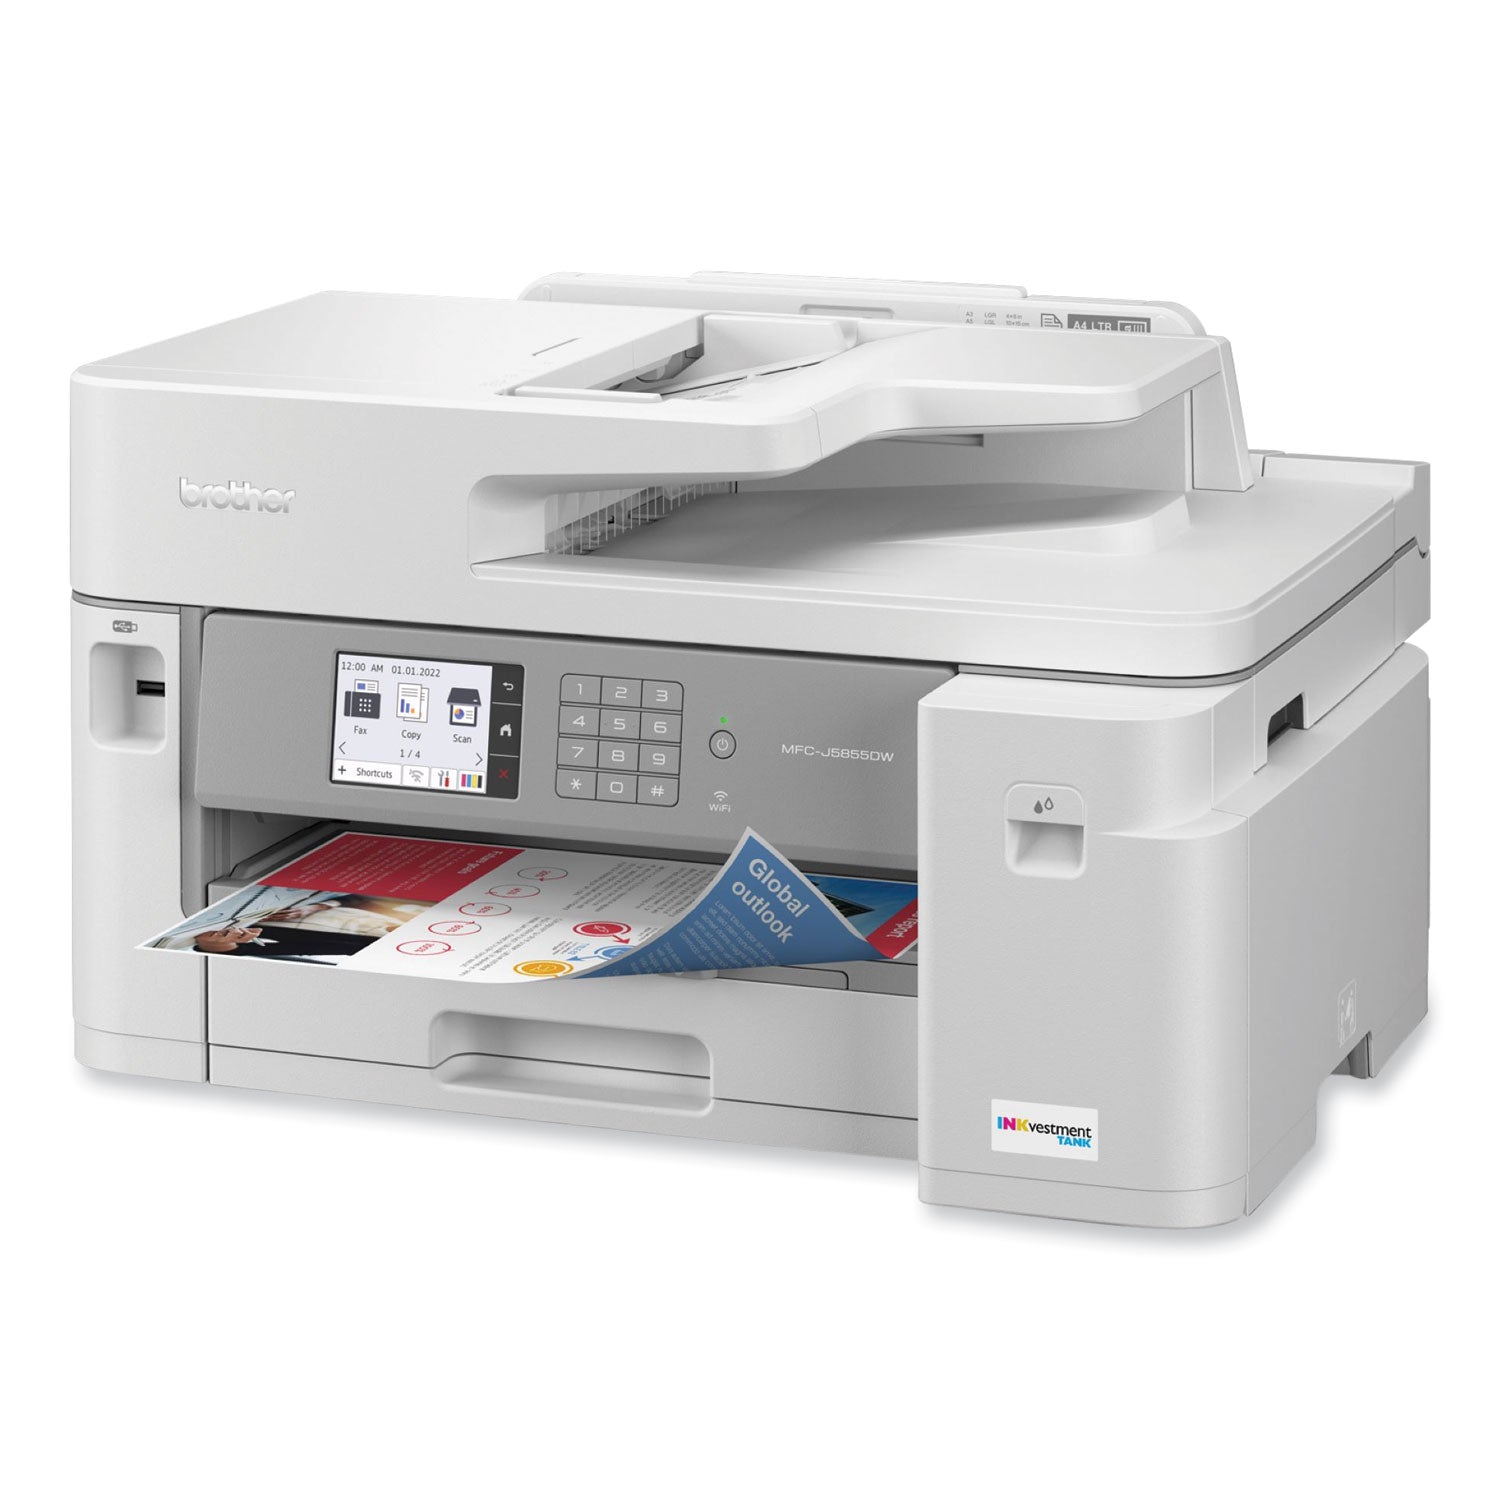 mfc-j5855dw-inkvestment-tank-all-in-one-color-inkjet-printer-copy-fax-print-scan_brtmfcj5855dw - 2